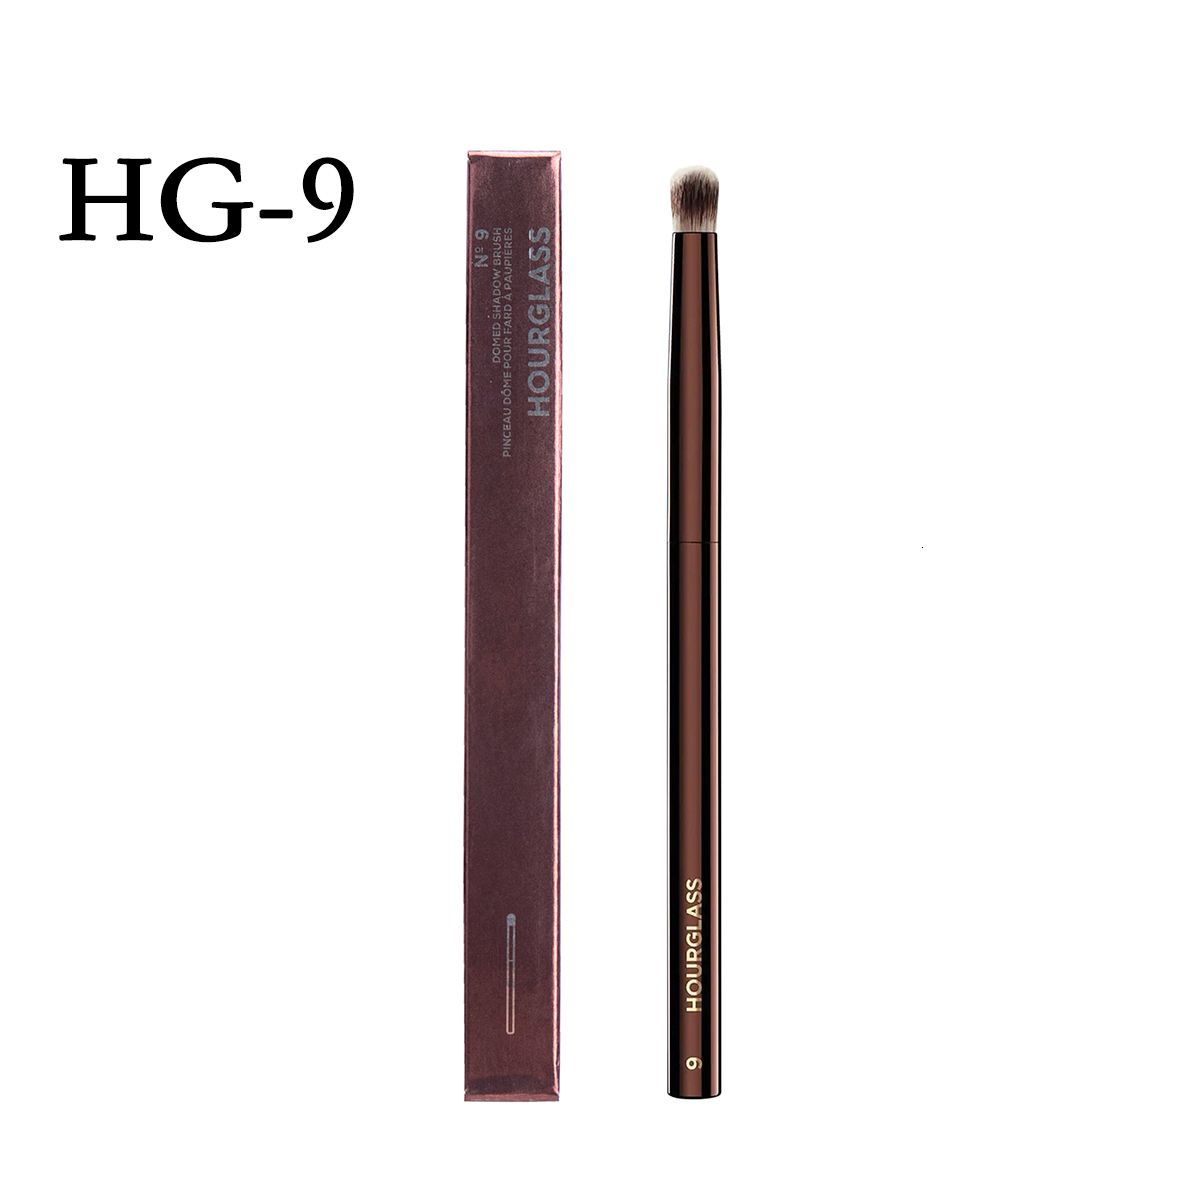 HG-9